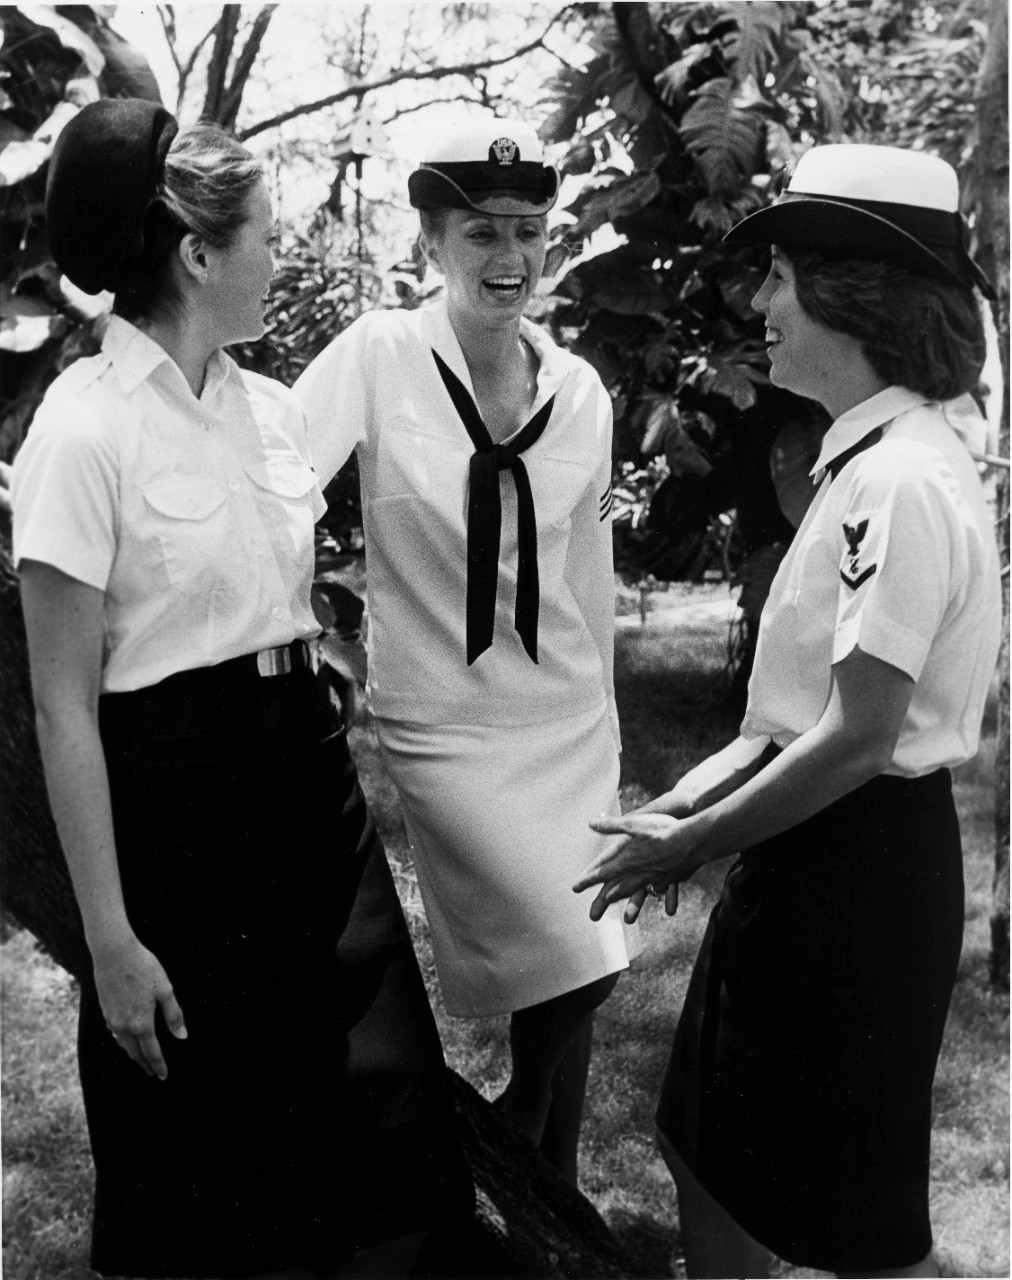 Female sailors model uniforms